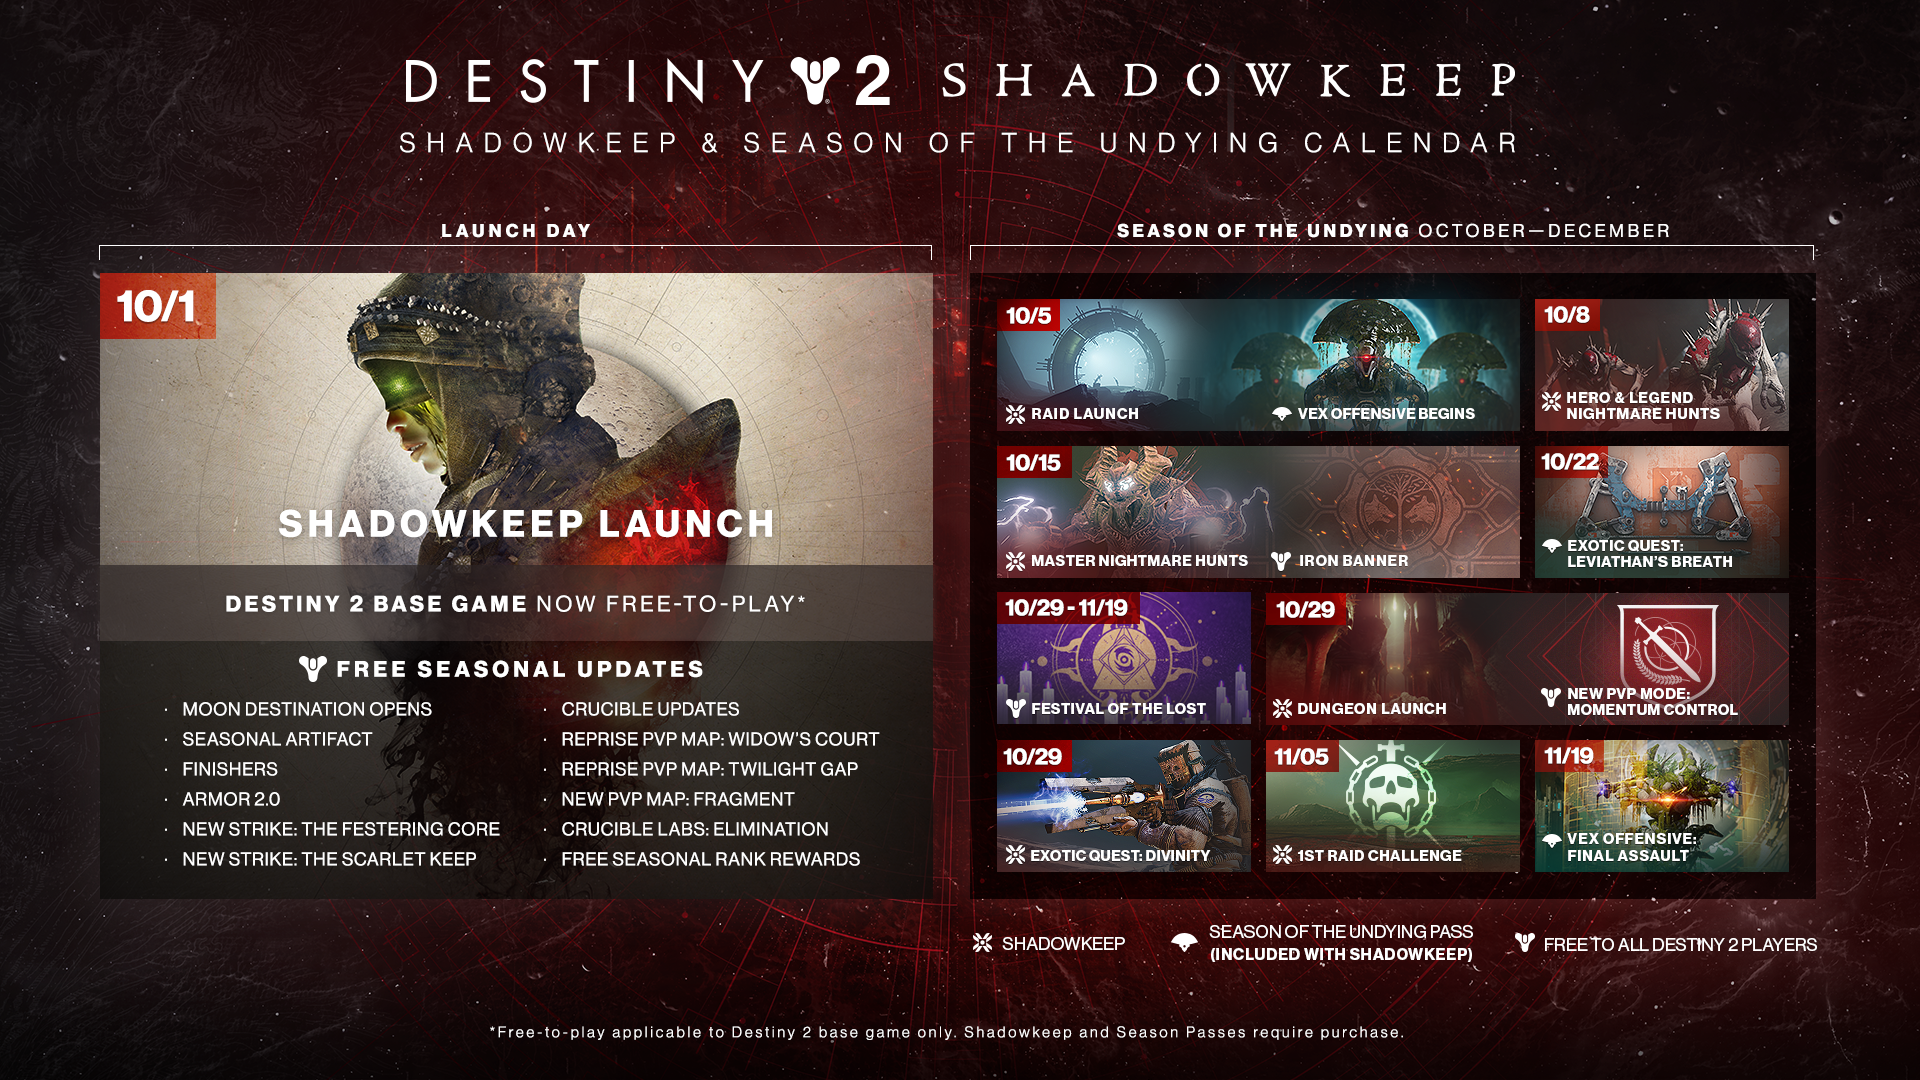 Destiny 2 Shadowkeep Roadmap – Season of the Undying